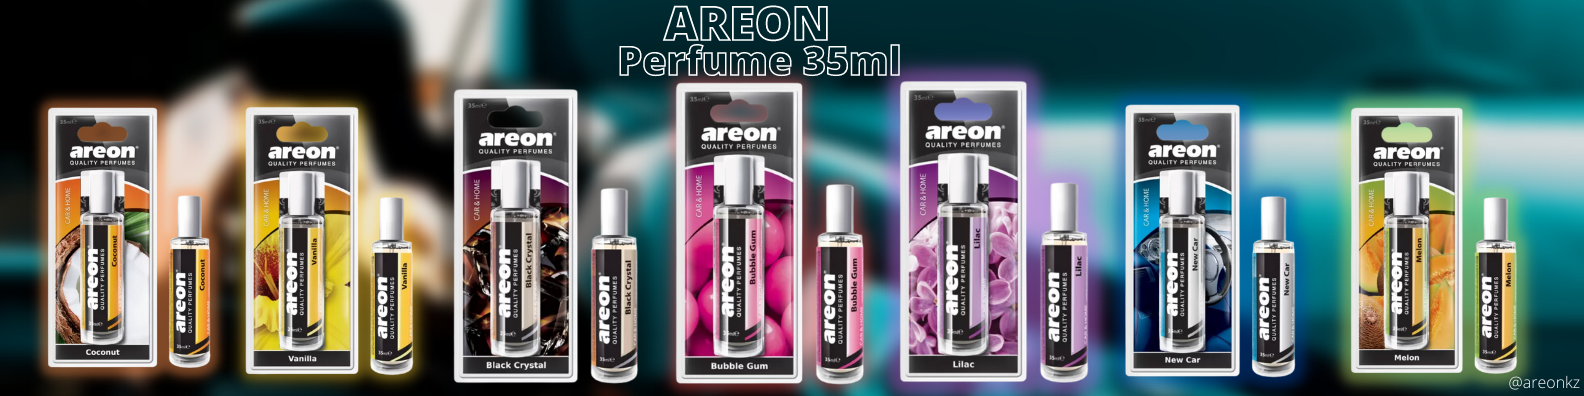 Areon Perfume 35 ml